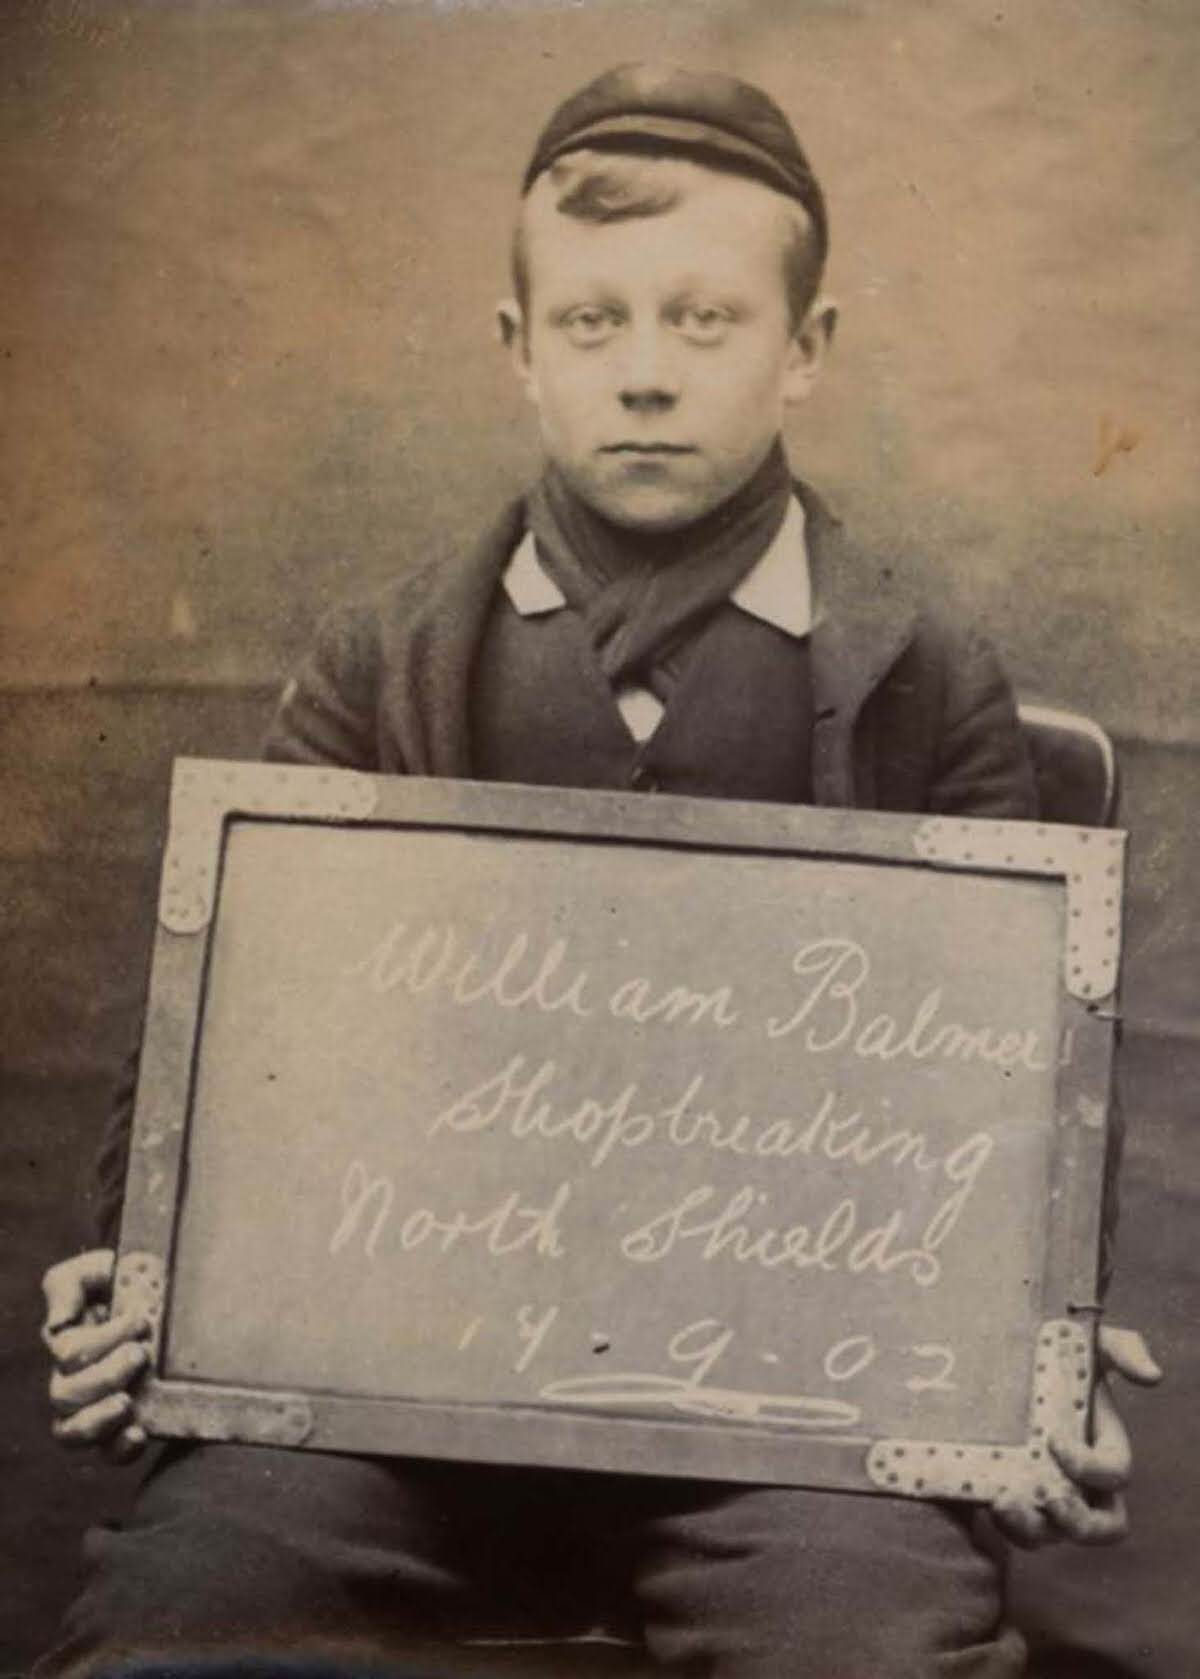 William Balmer, 15, arrested for shopbreaking, 1902.